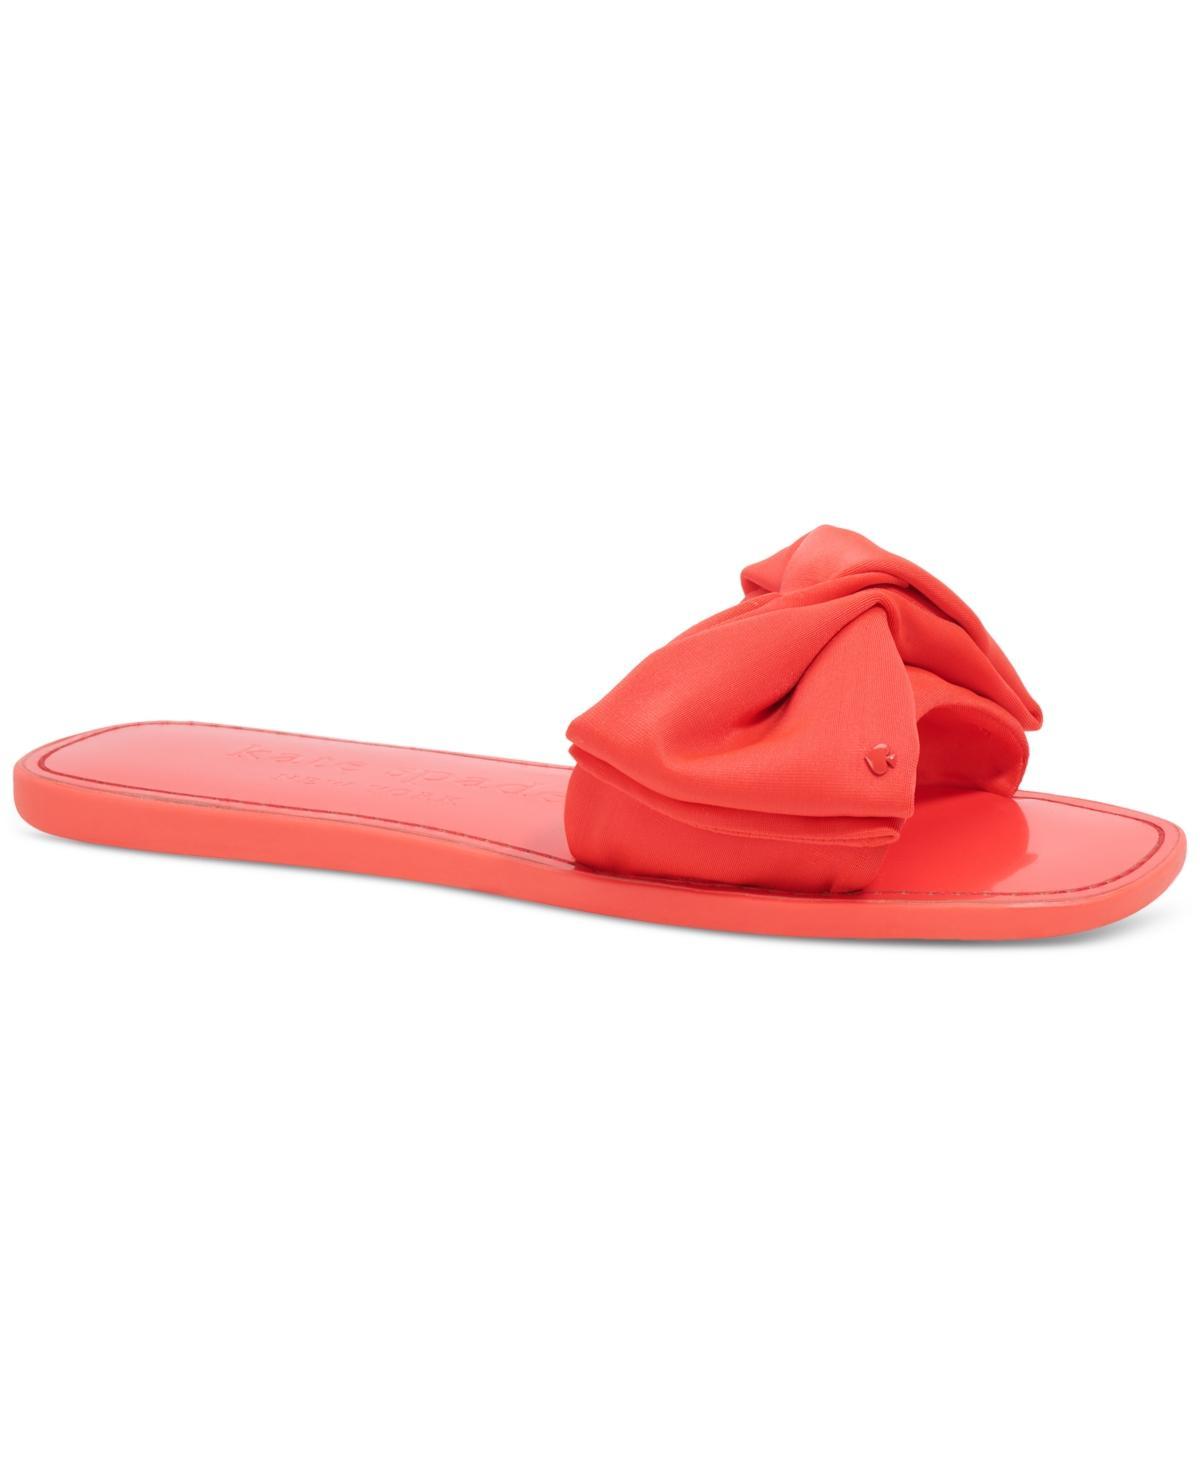 kate spade new york bikini slide sandal Product Image